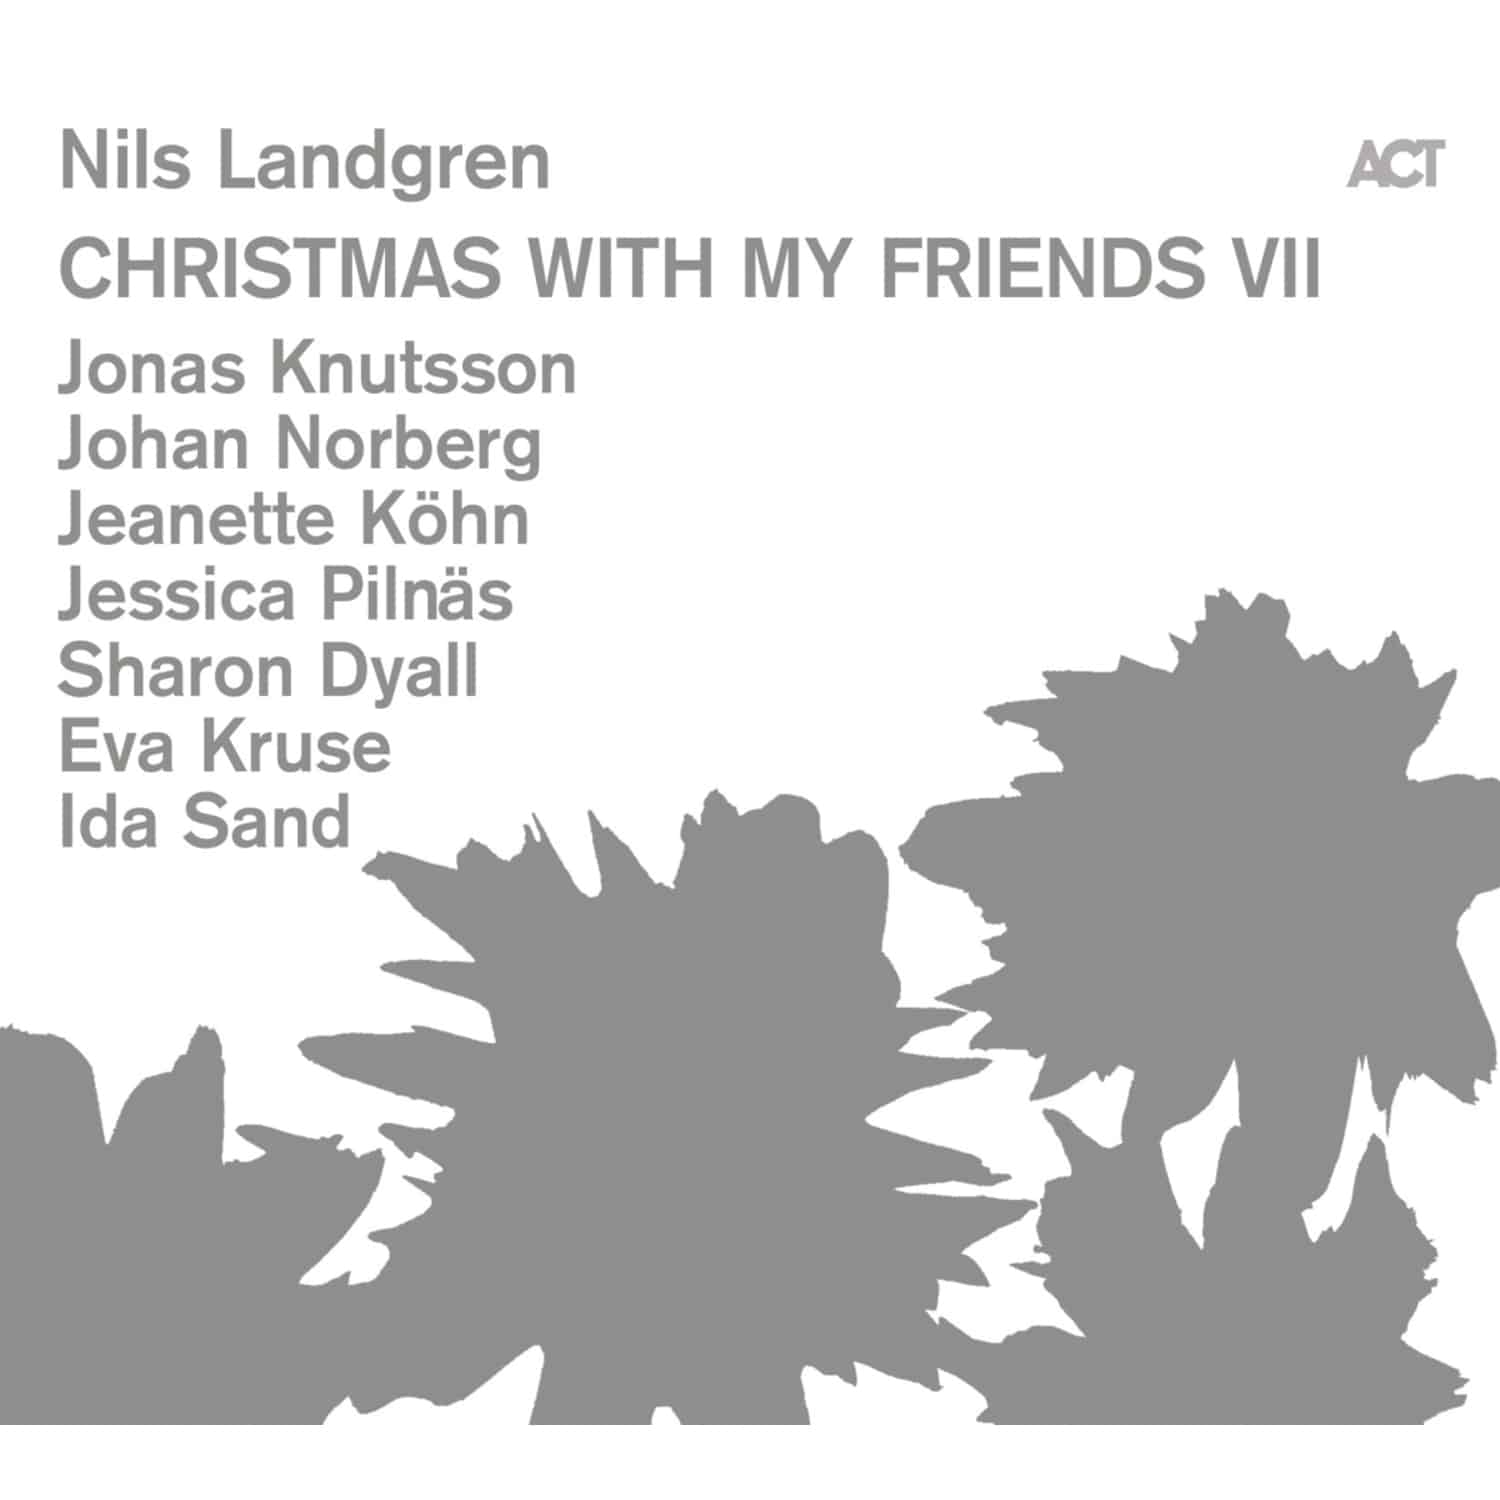 Nils Landgren - CHRISTMAS WITH MY FRIENDS VII 